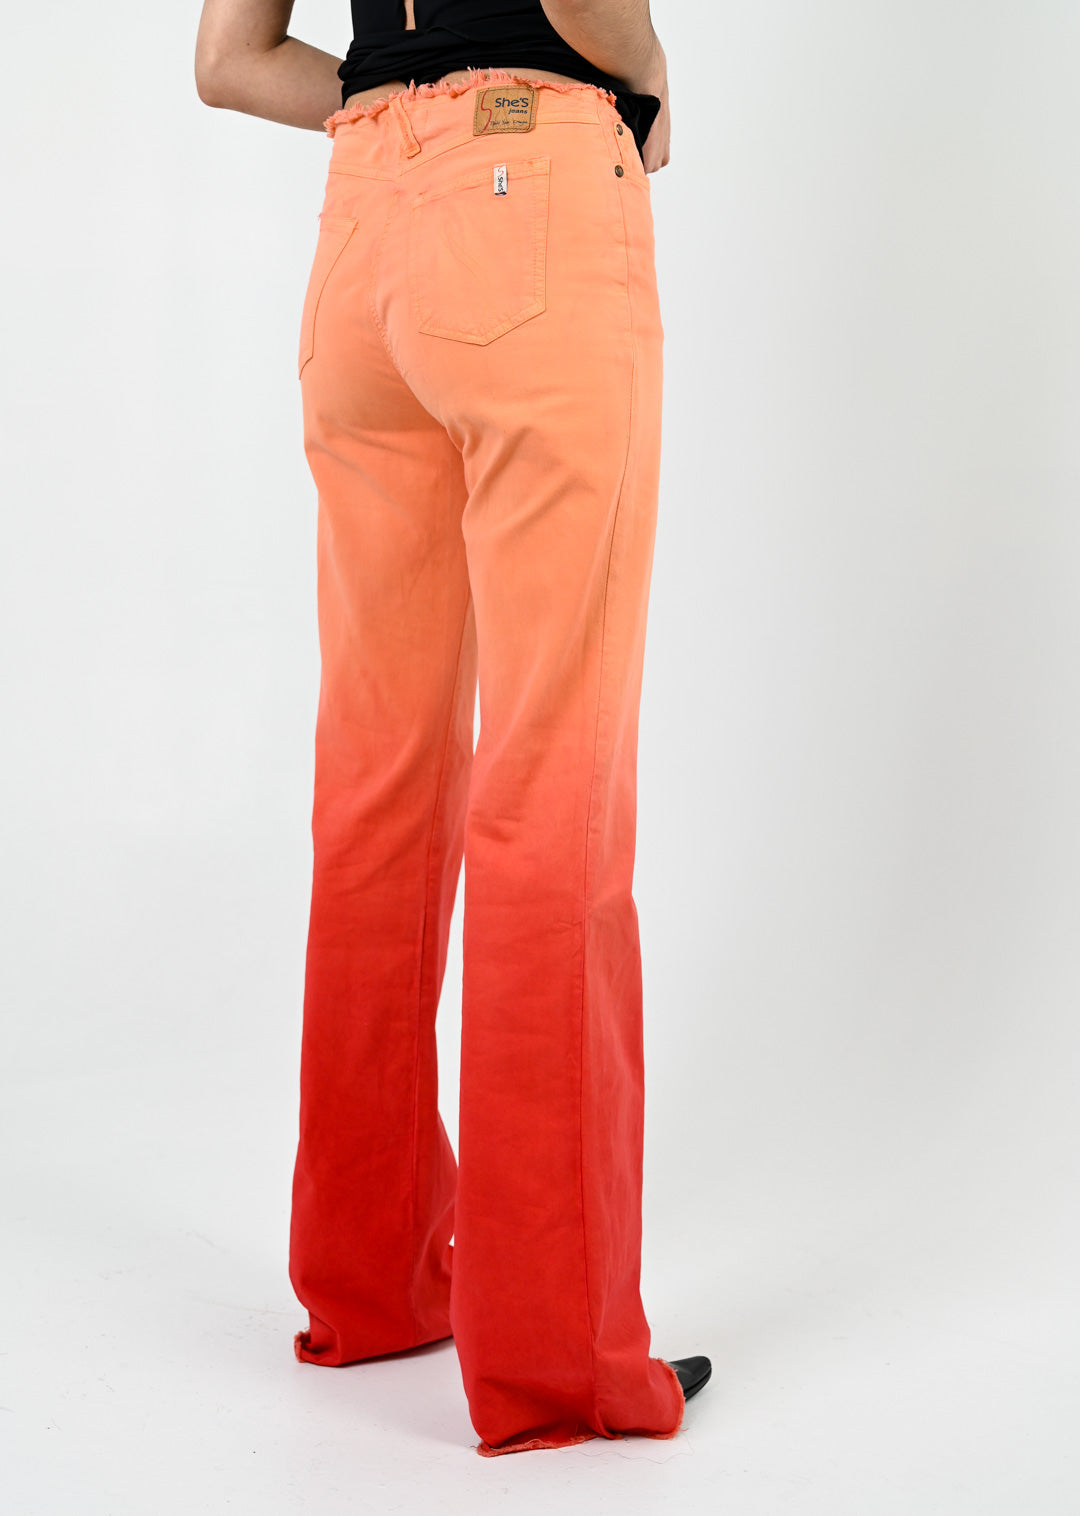 Tangerine Ombre Pants